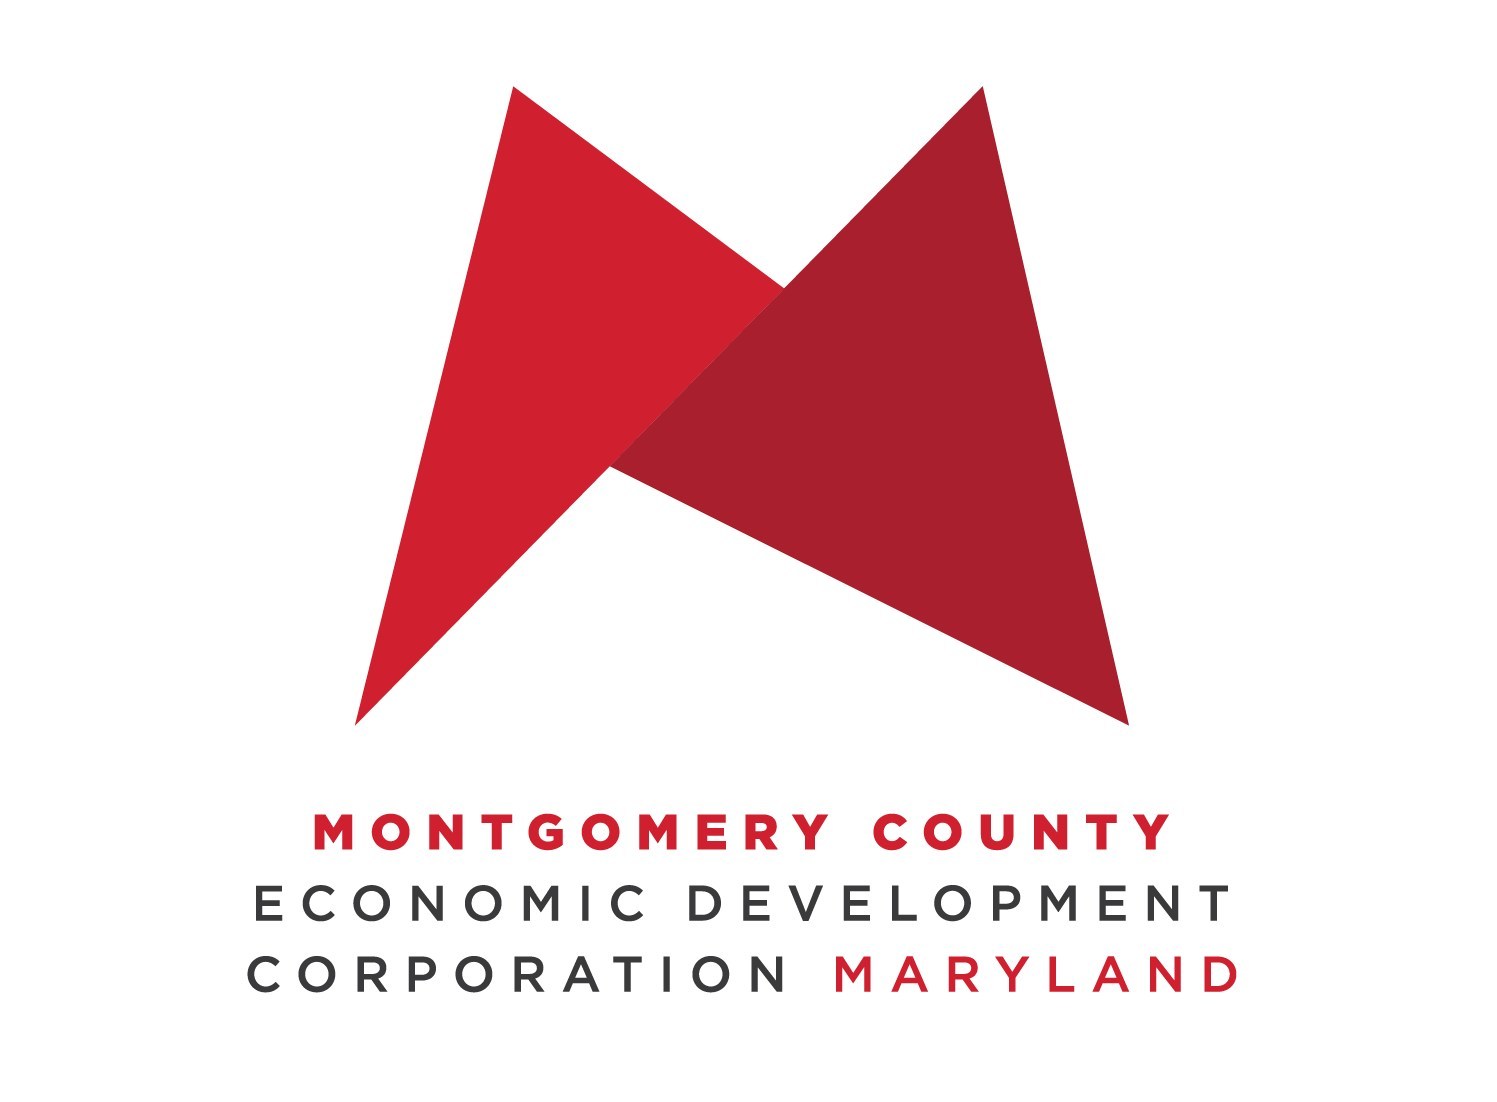 Maryland Economic Development Corporation - Maryland (MCEDC) (PRNewsfoto/Montgomery County Economic Development Corporation)